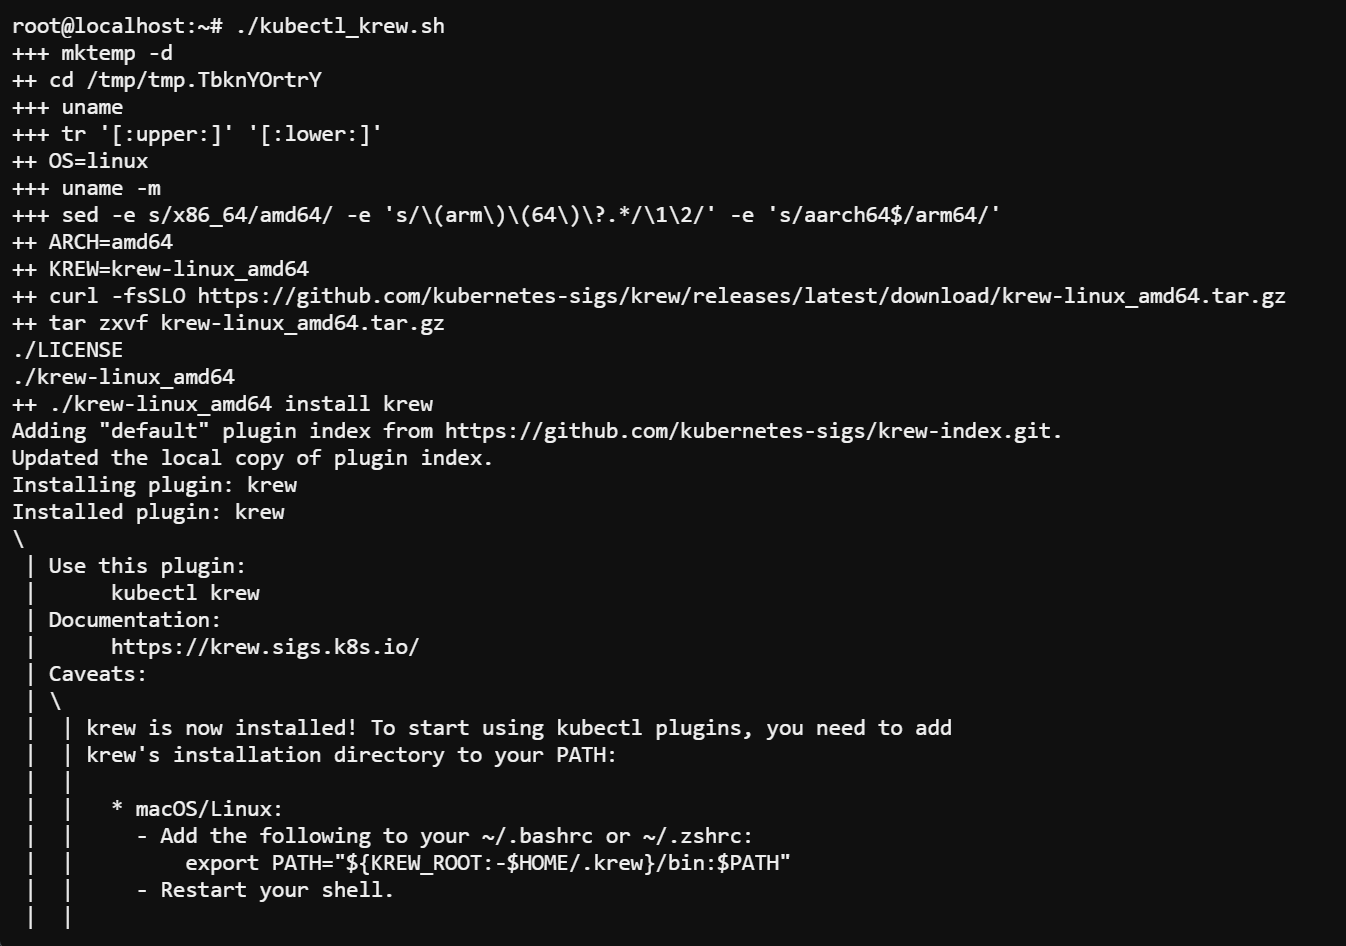 Installing the Kubectl Krew plugin manager via the kubectl_krew.sh Bash script